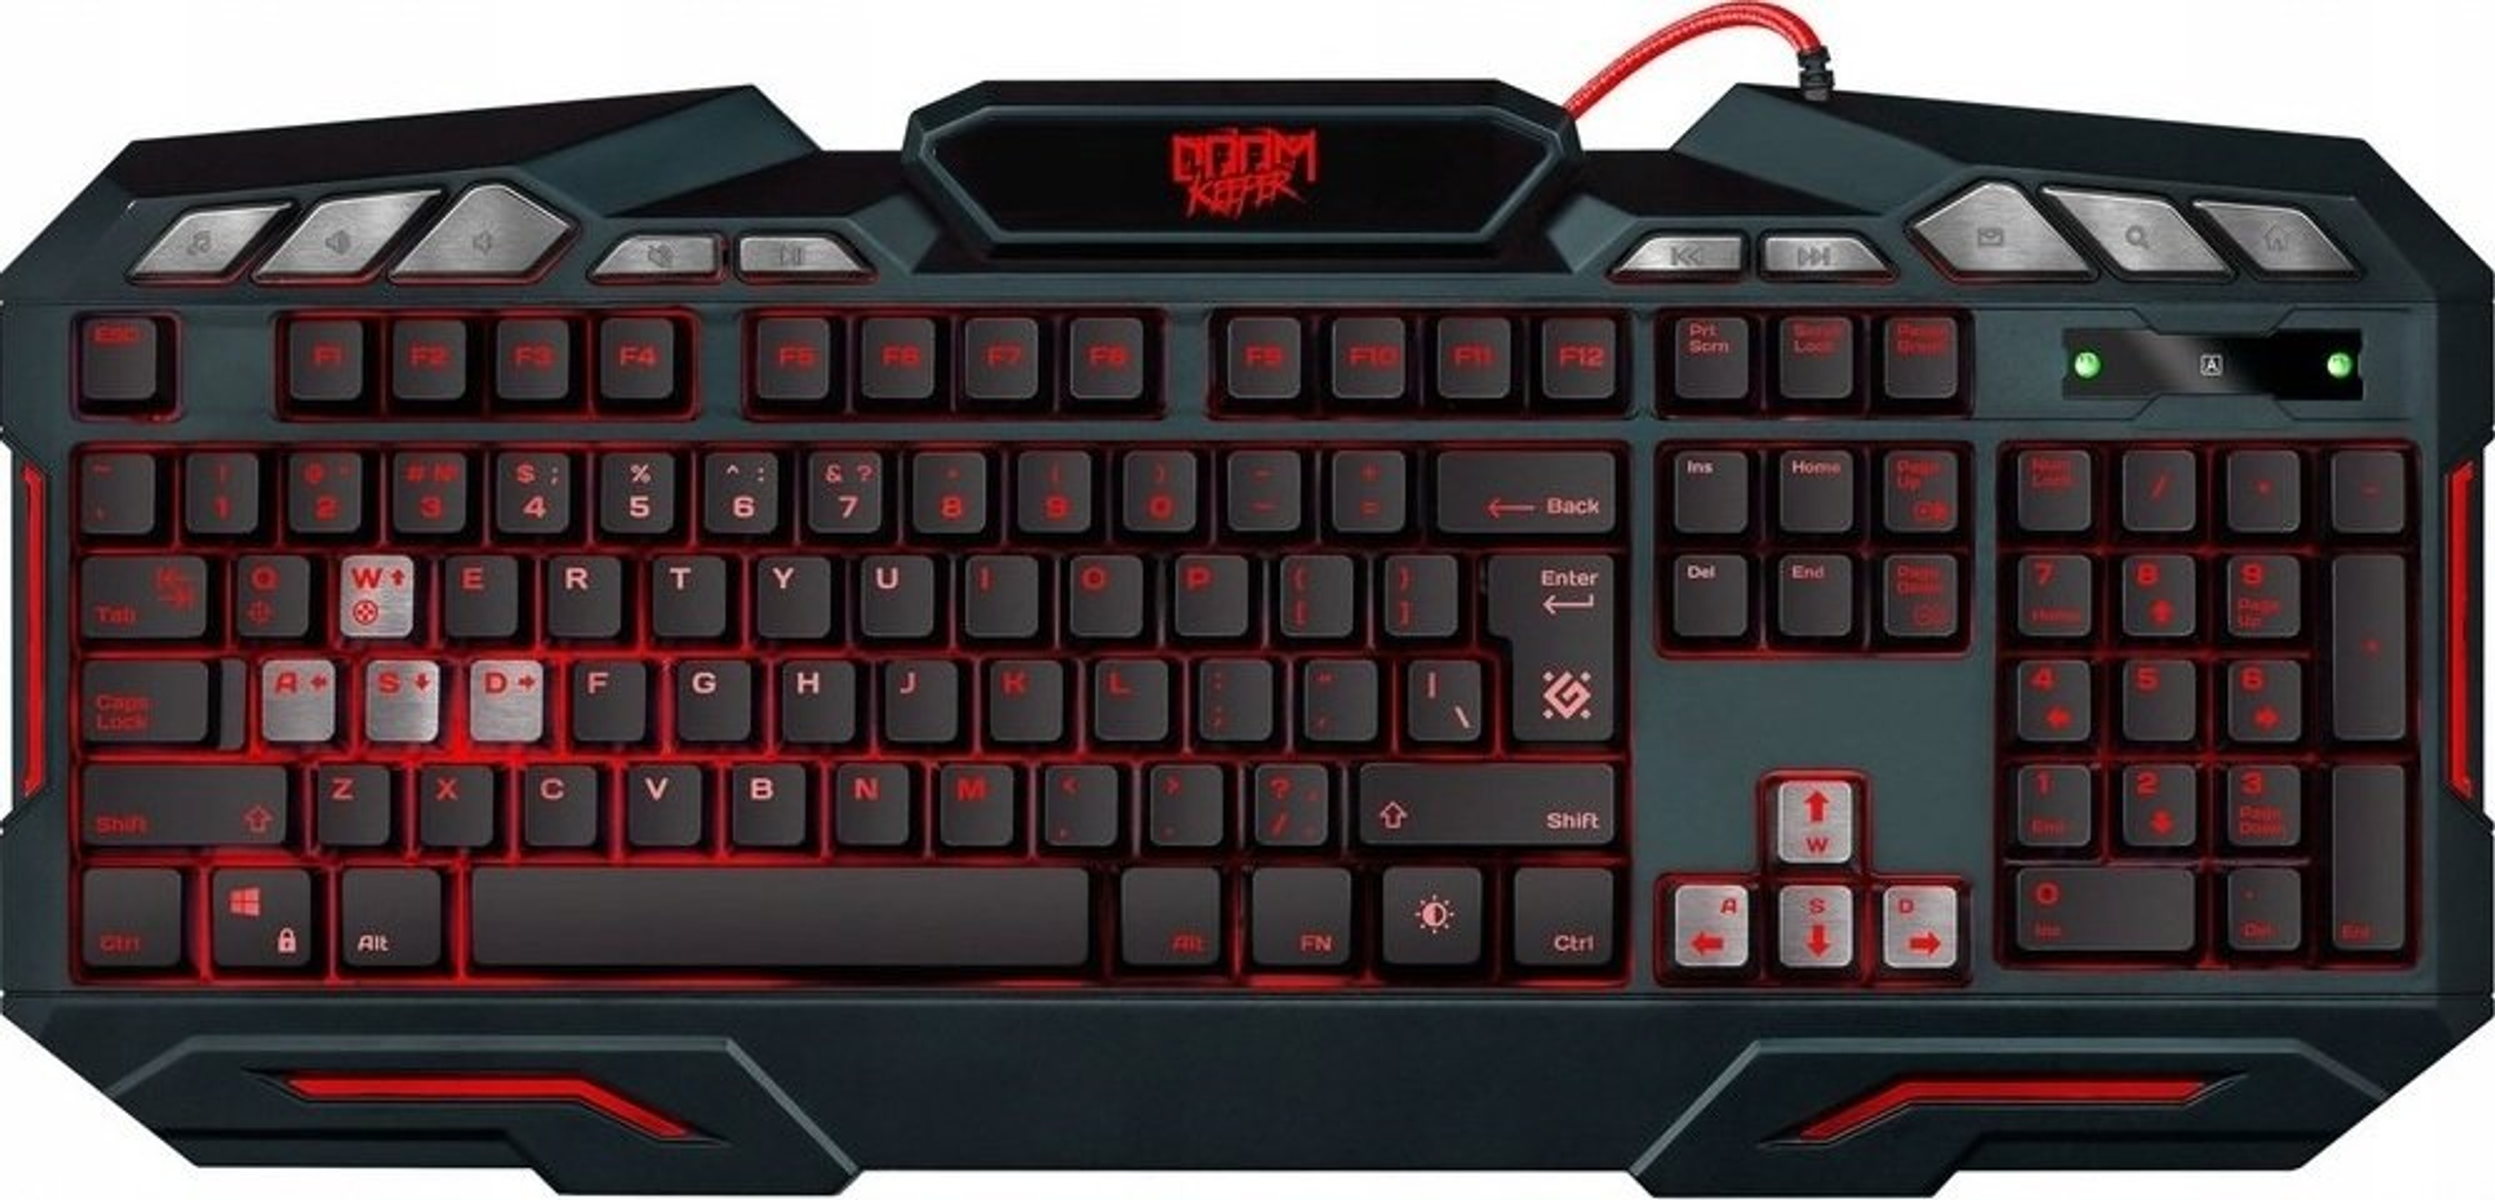 DEFENDER DEFEN-45104, Tastatur Gaming